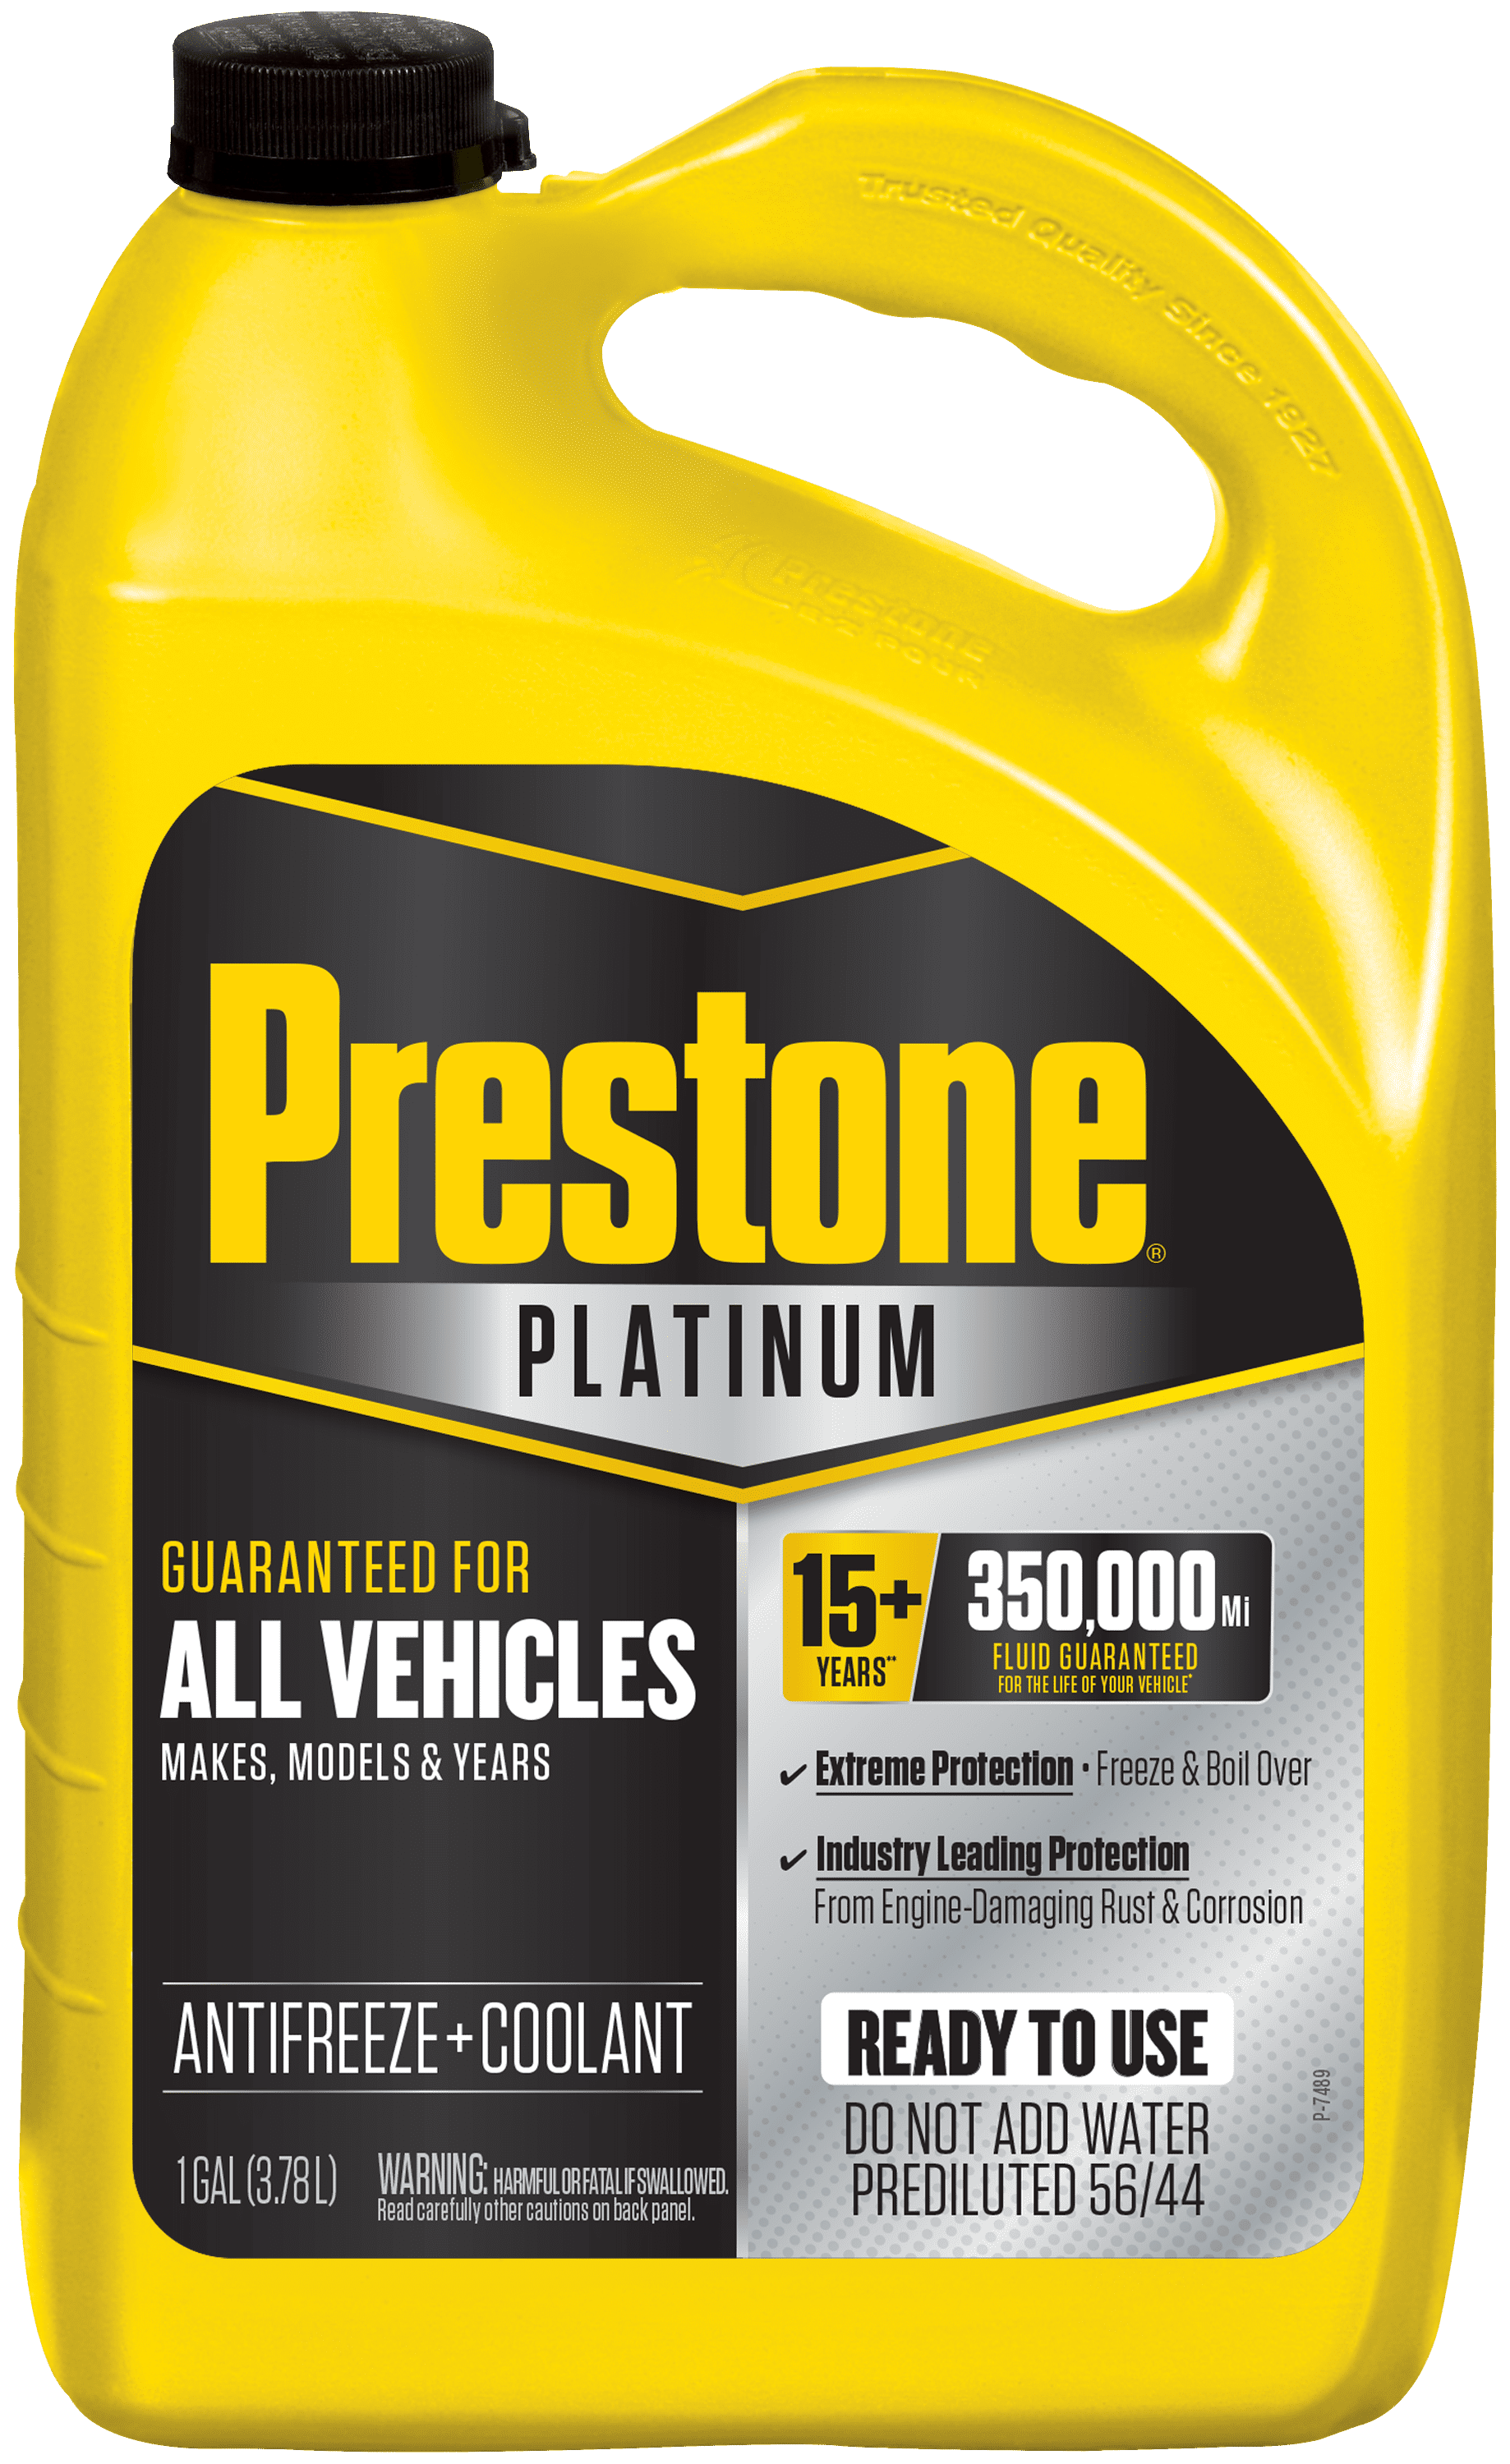 Prestone Platinum Univ Antifreeze+Coolant; 15yr/350k mi, 1G - Ready to Use 50/50